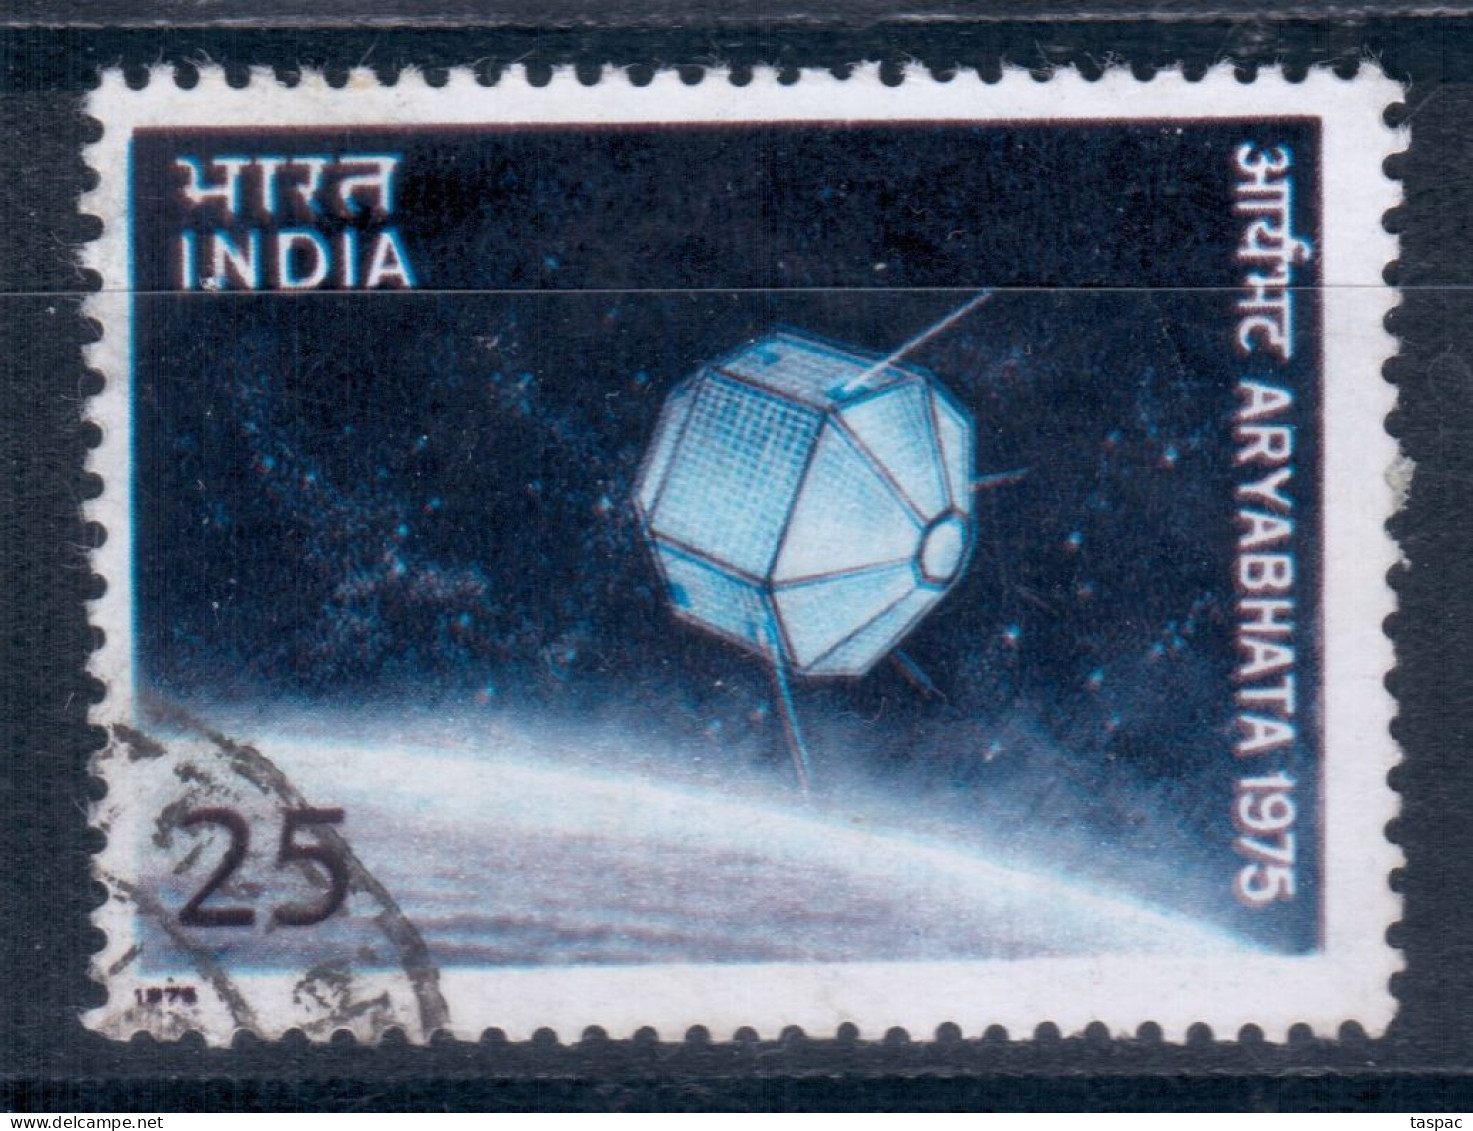 India 1975 Mi# 624 Used - Launching Of 1st Indian Satellite Aryabhata / Space - Used Stamps